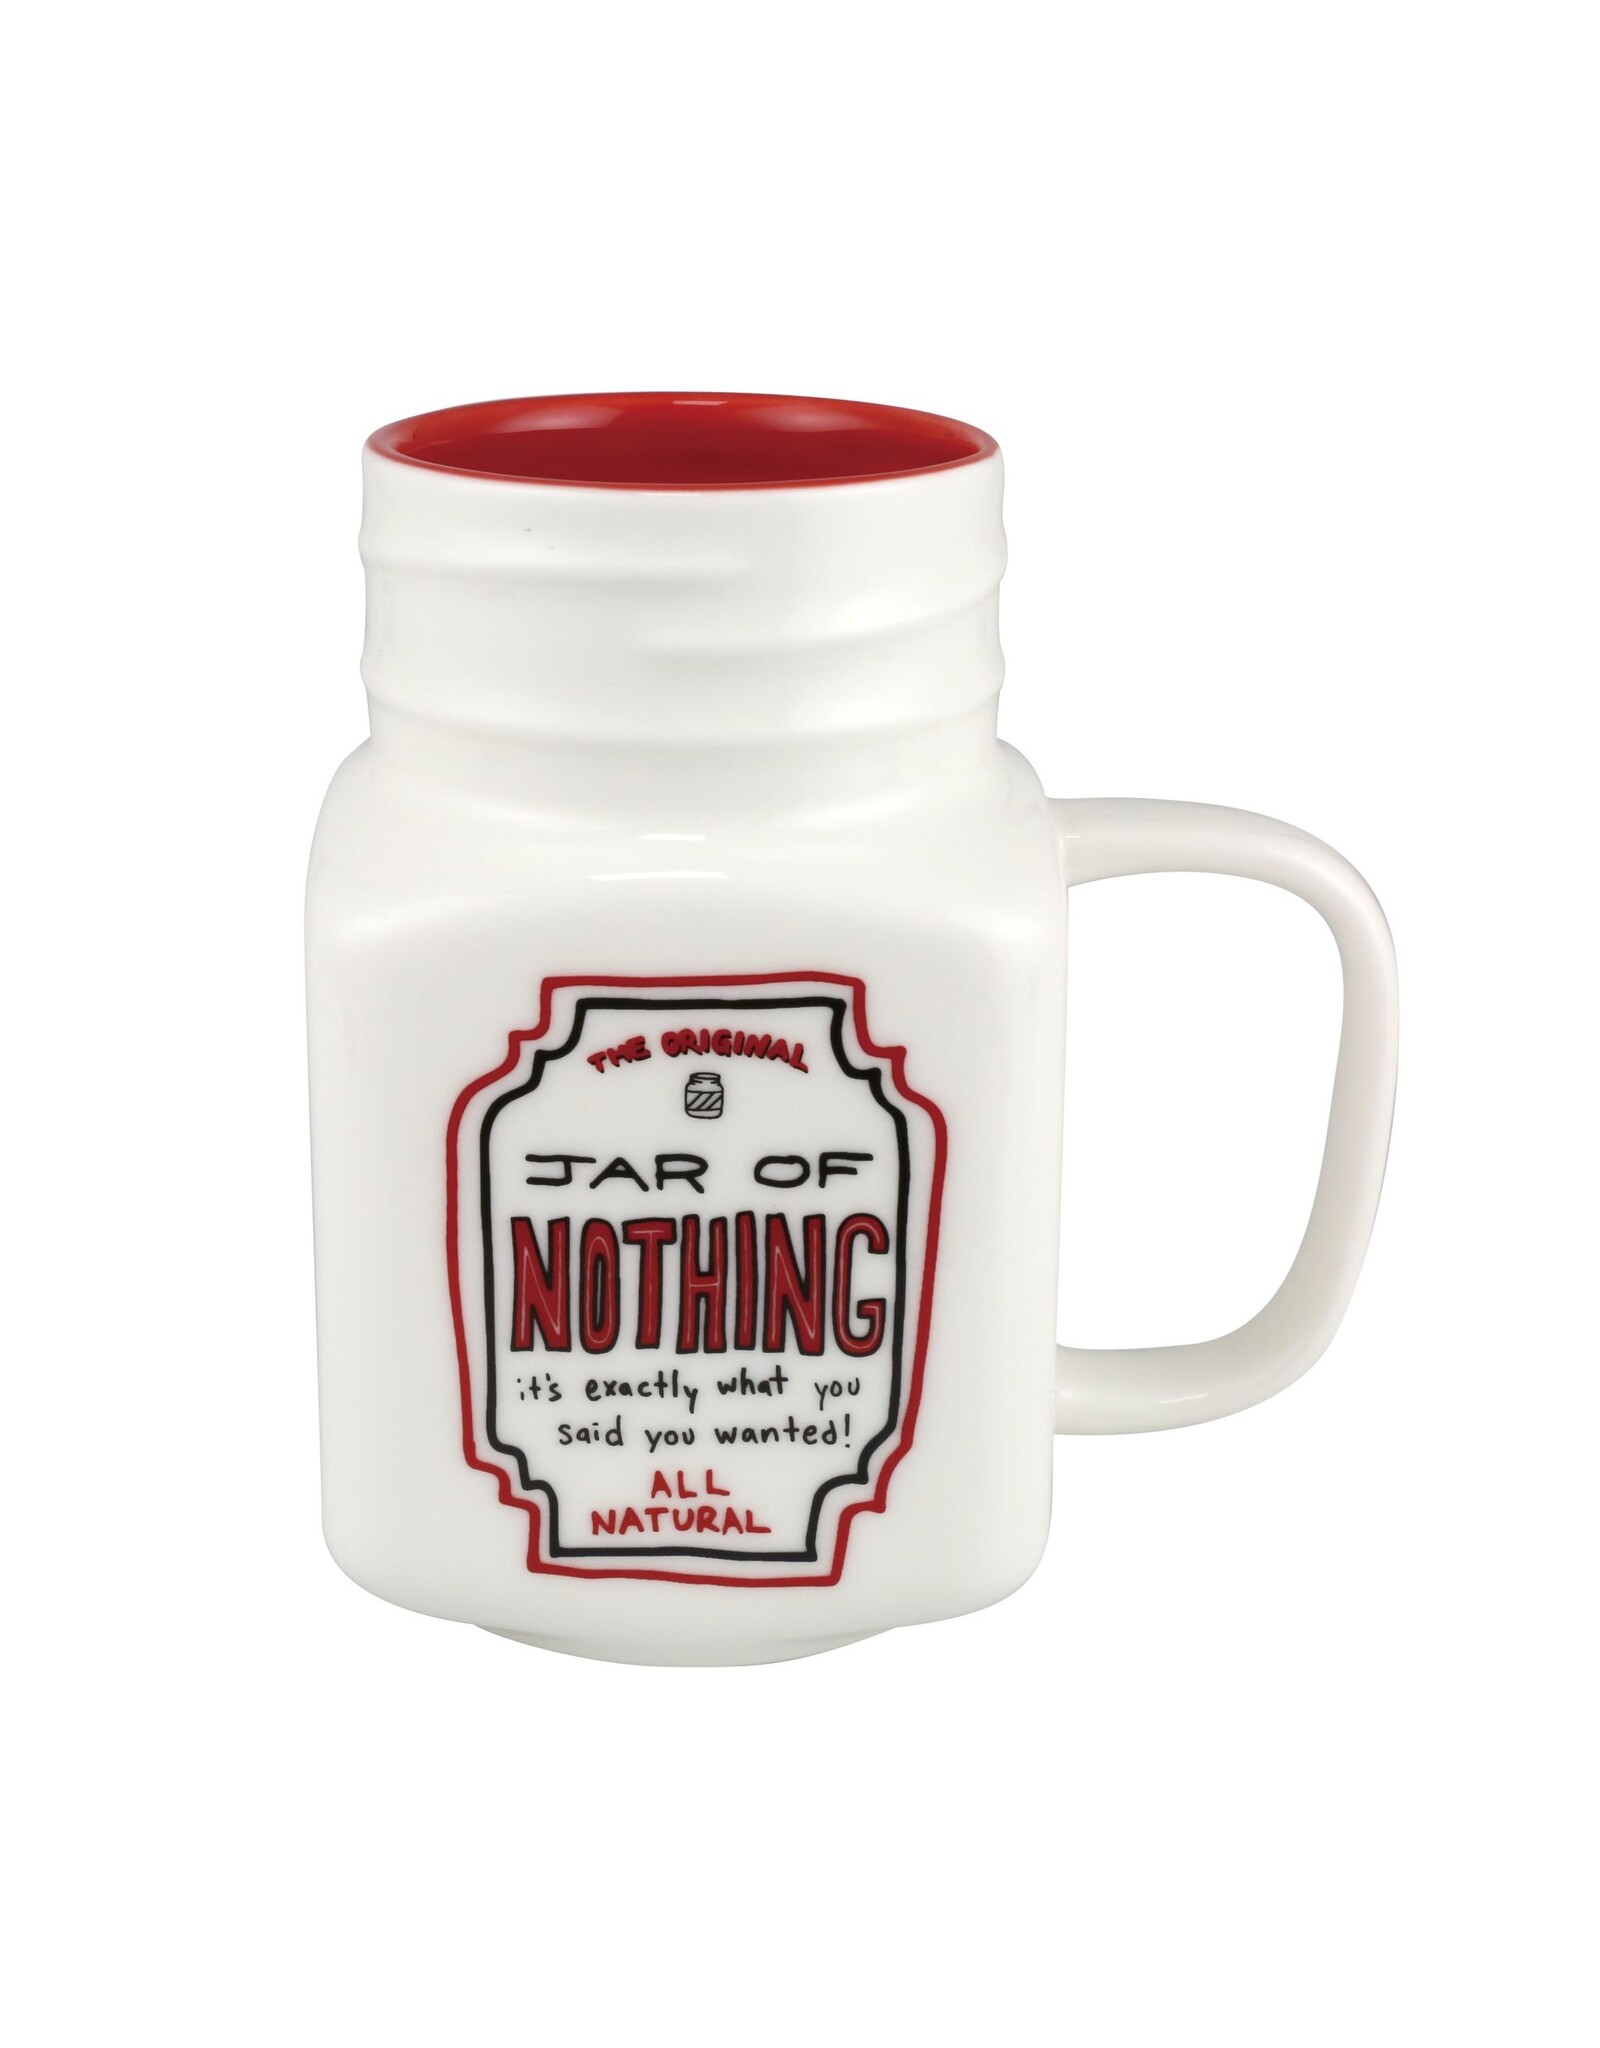 Enesco Jar of Nothing Mug